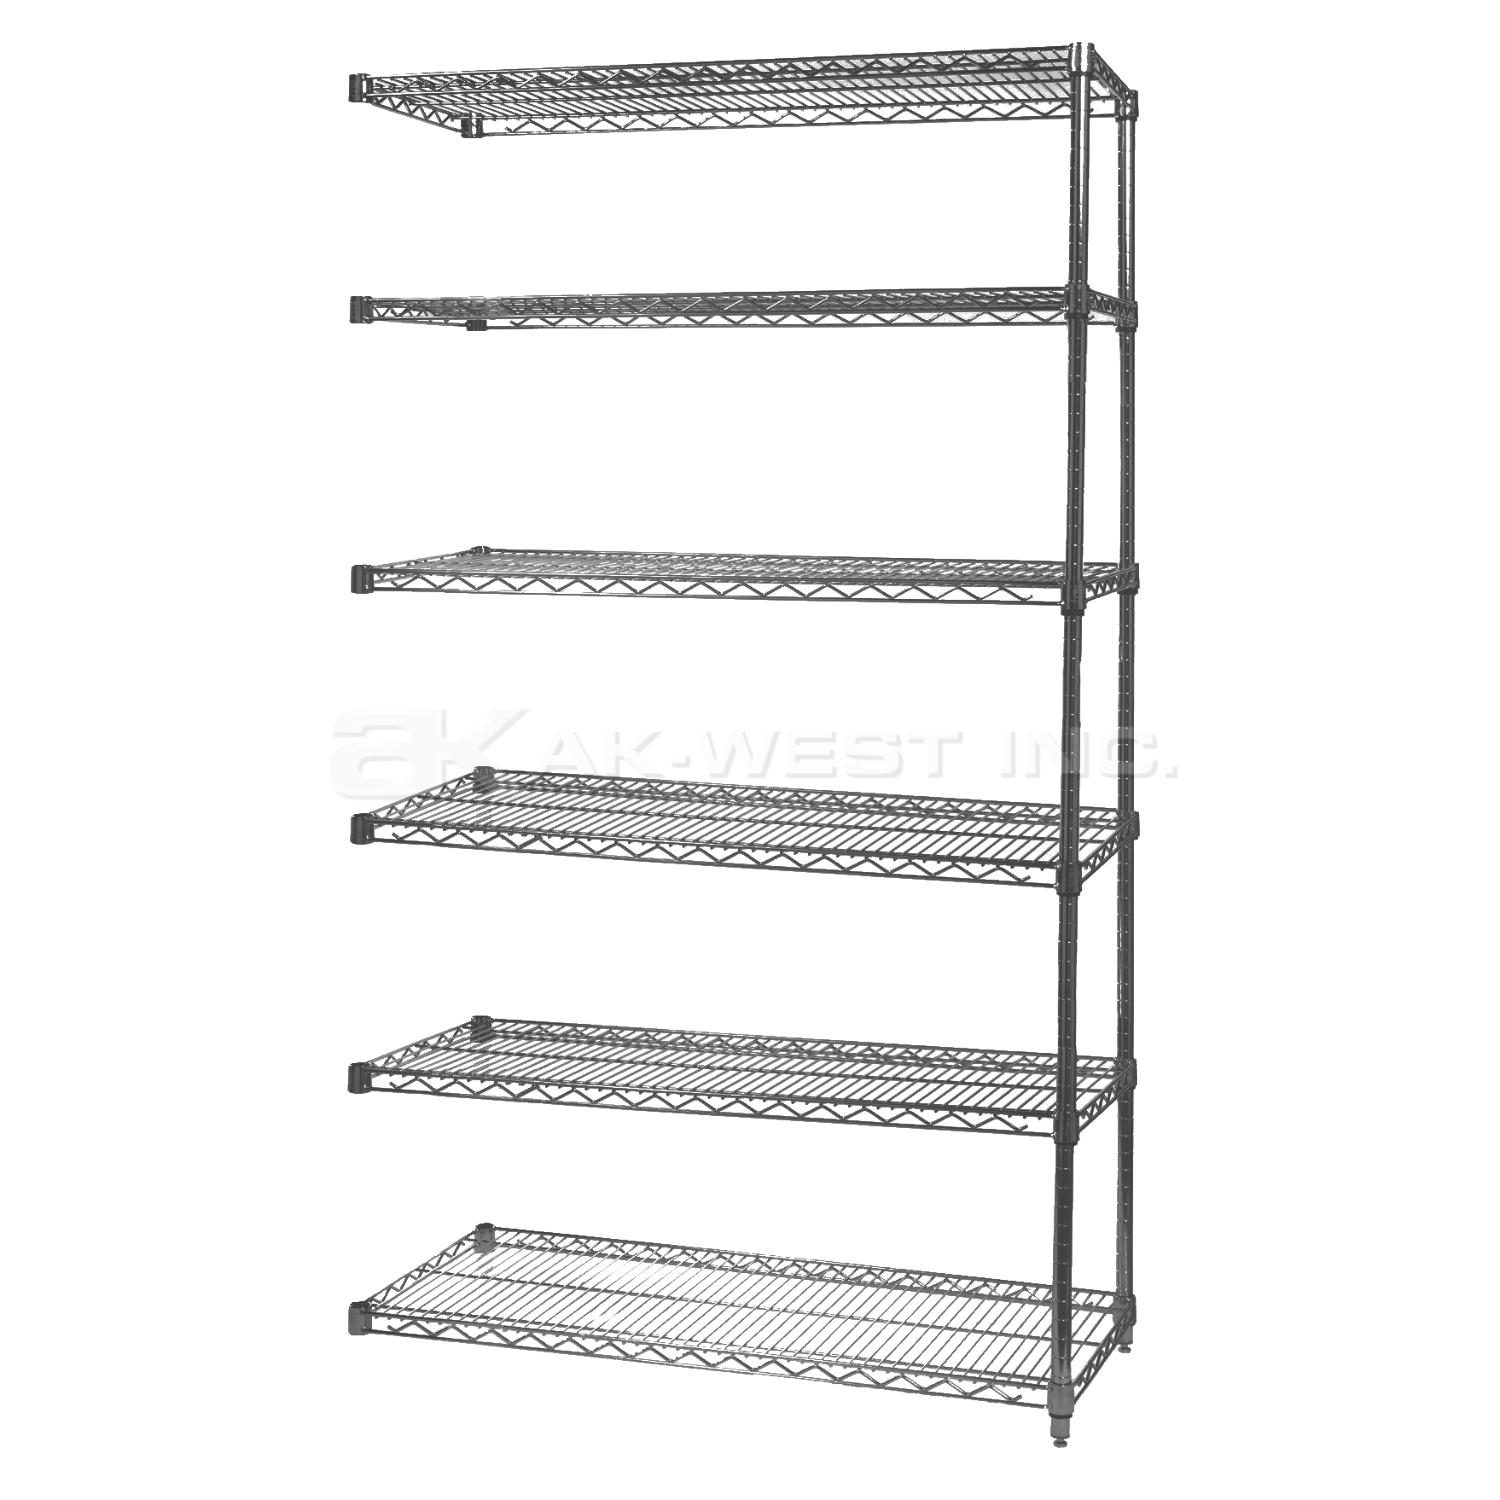 Grey, 18"D x 48"W x 86"H, 6 Shelf, Wire Shelving Adder Kit